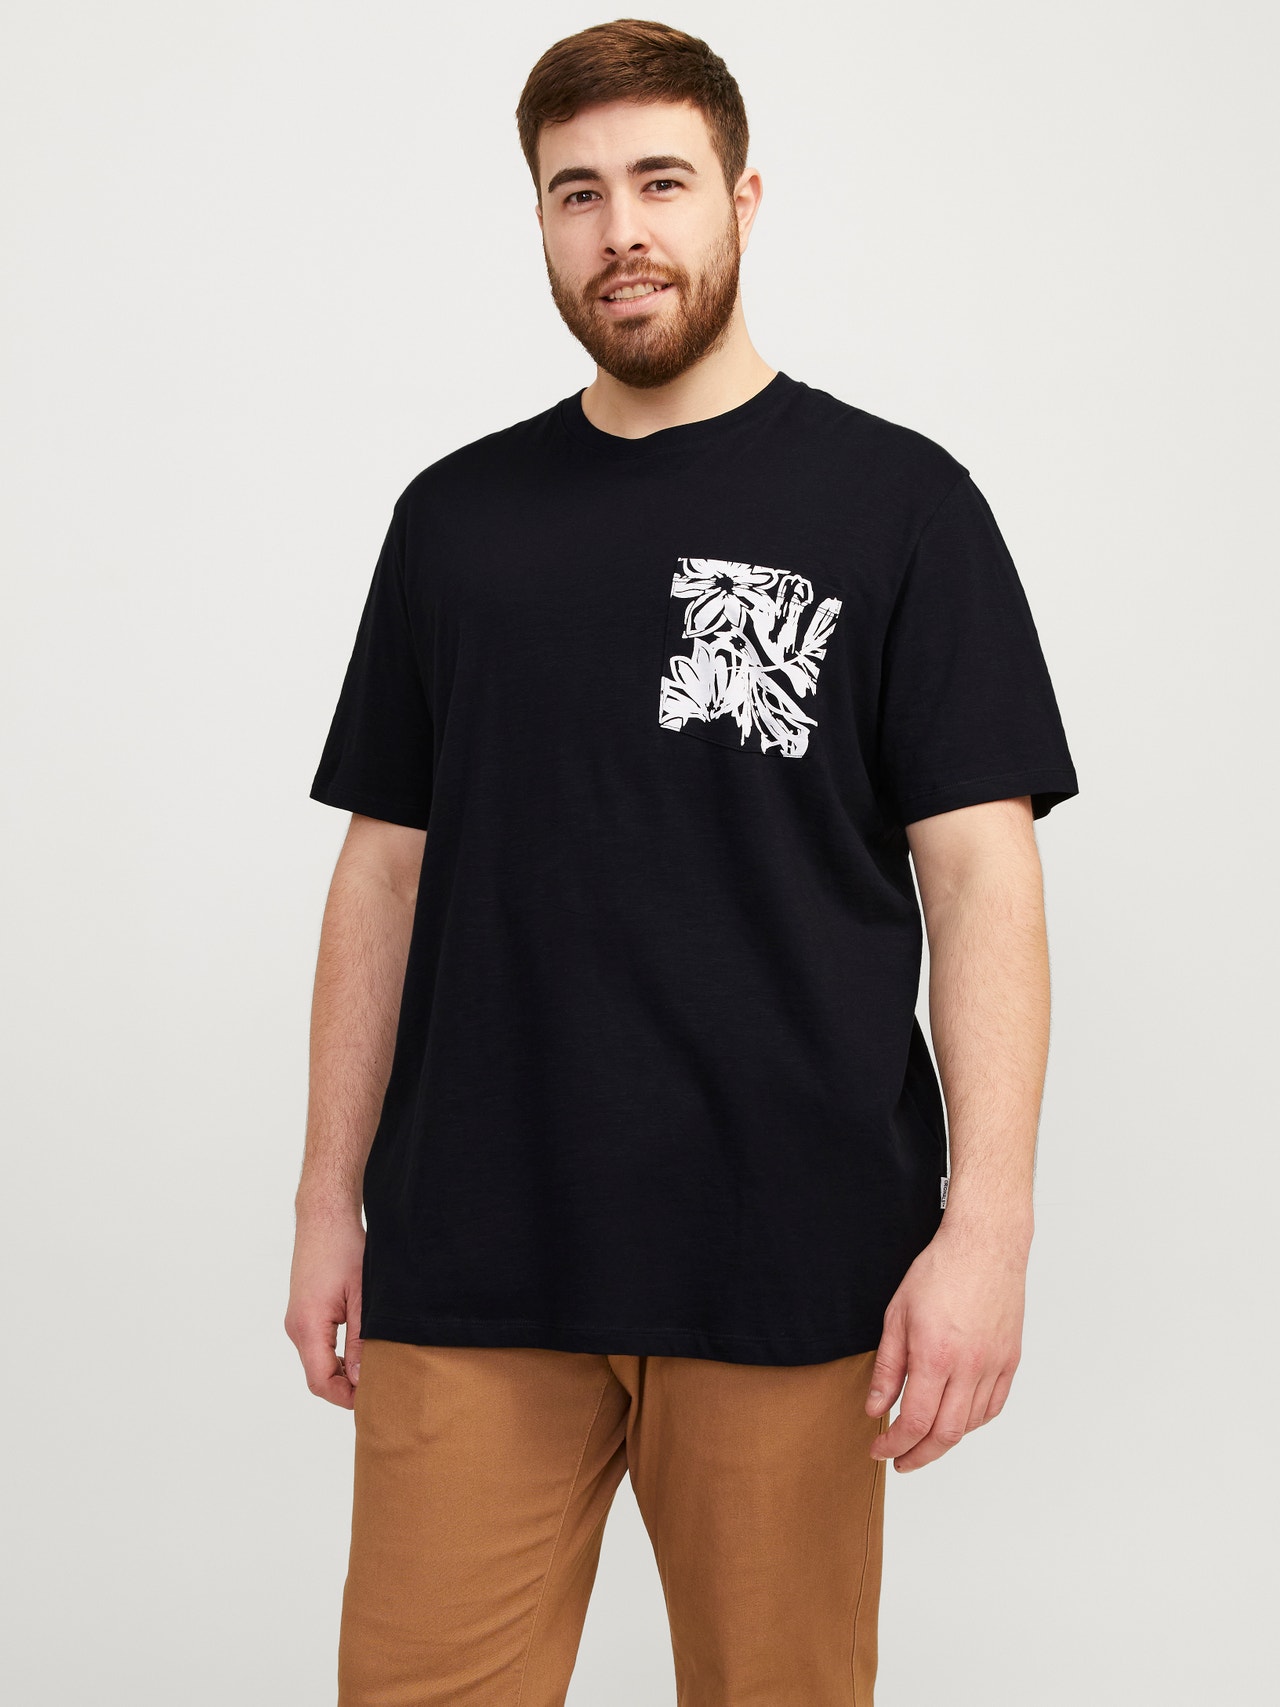 Jack & Jones Plus Size Tryck T-shirt -Black - 12257516